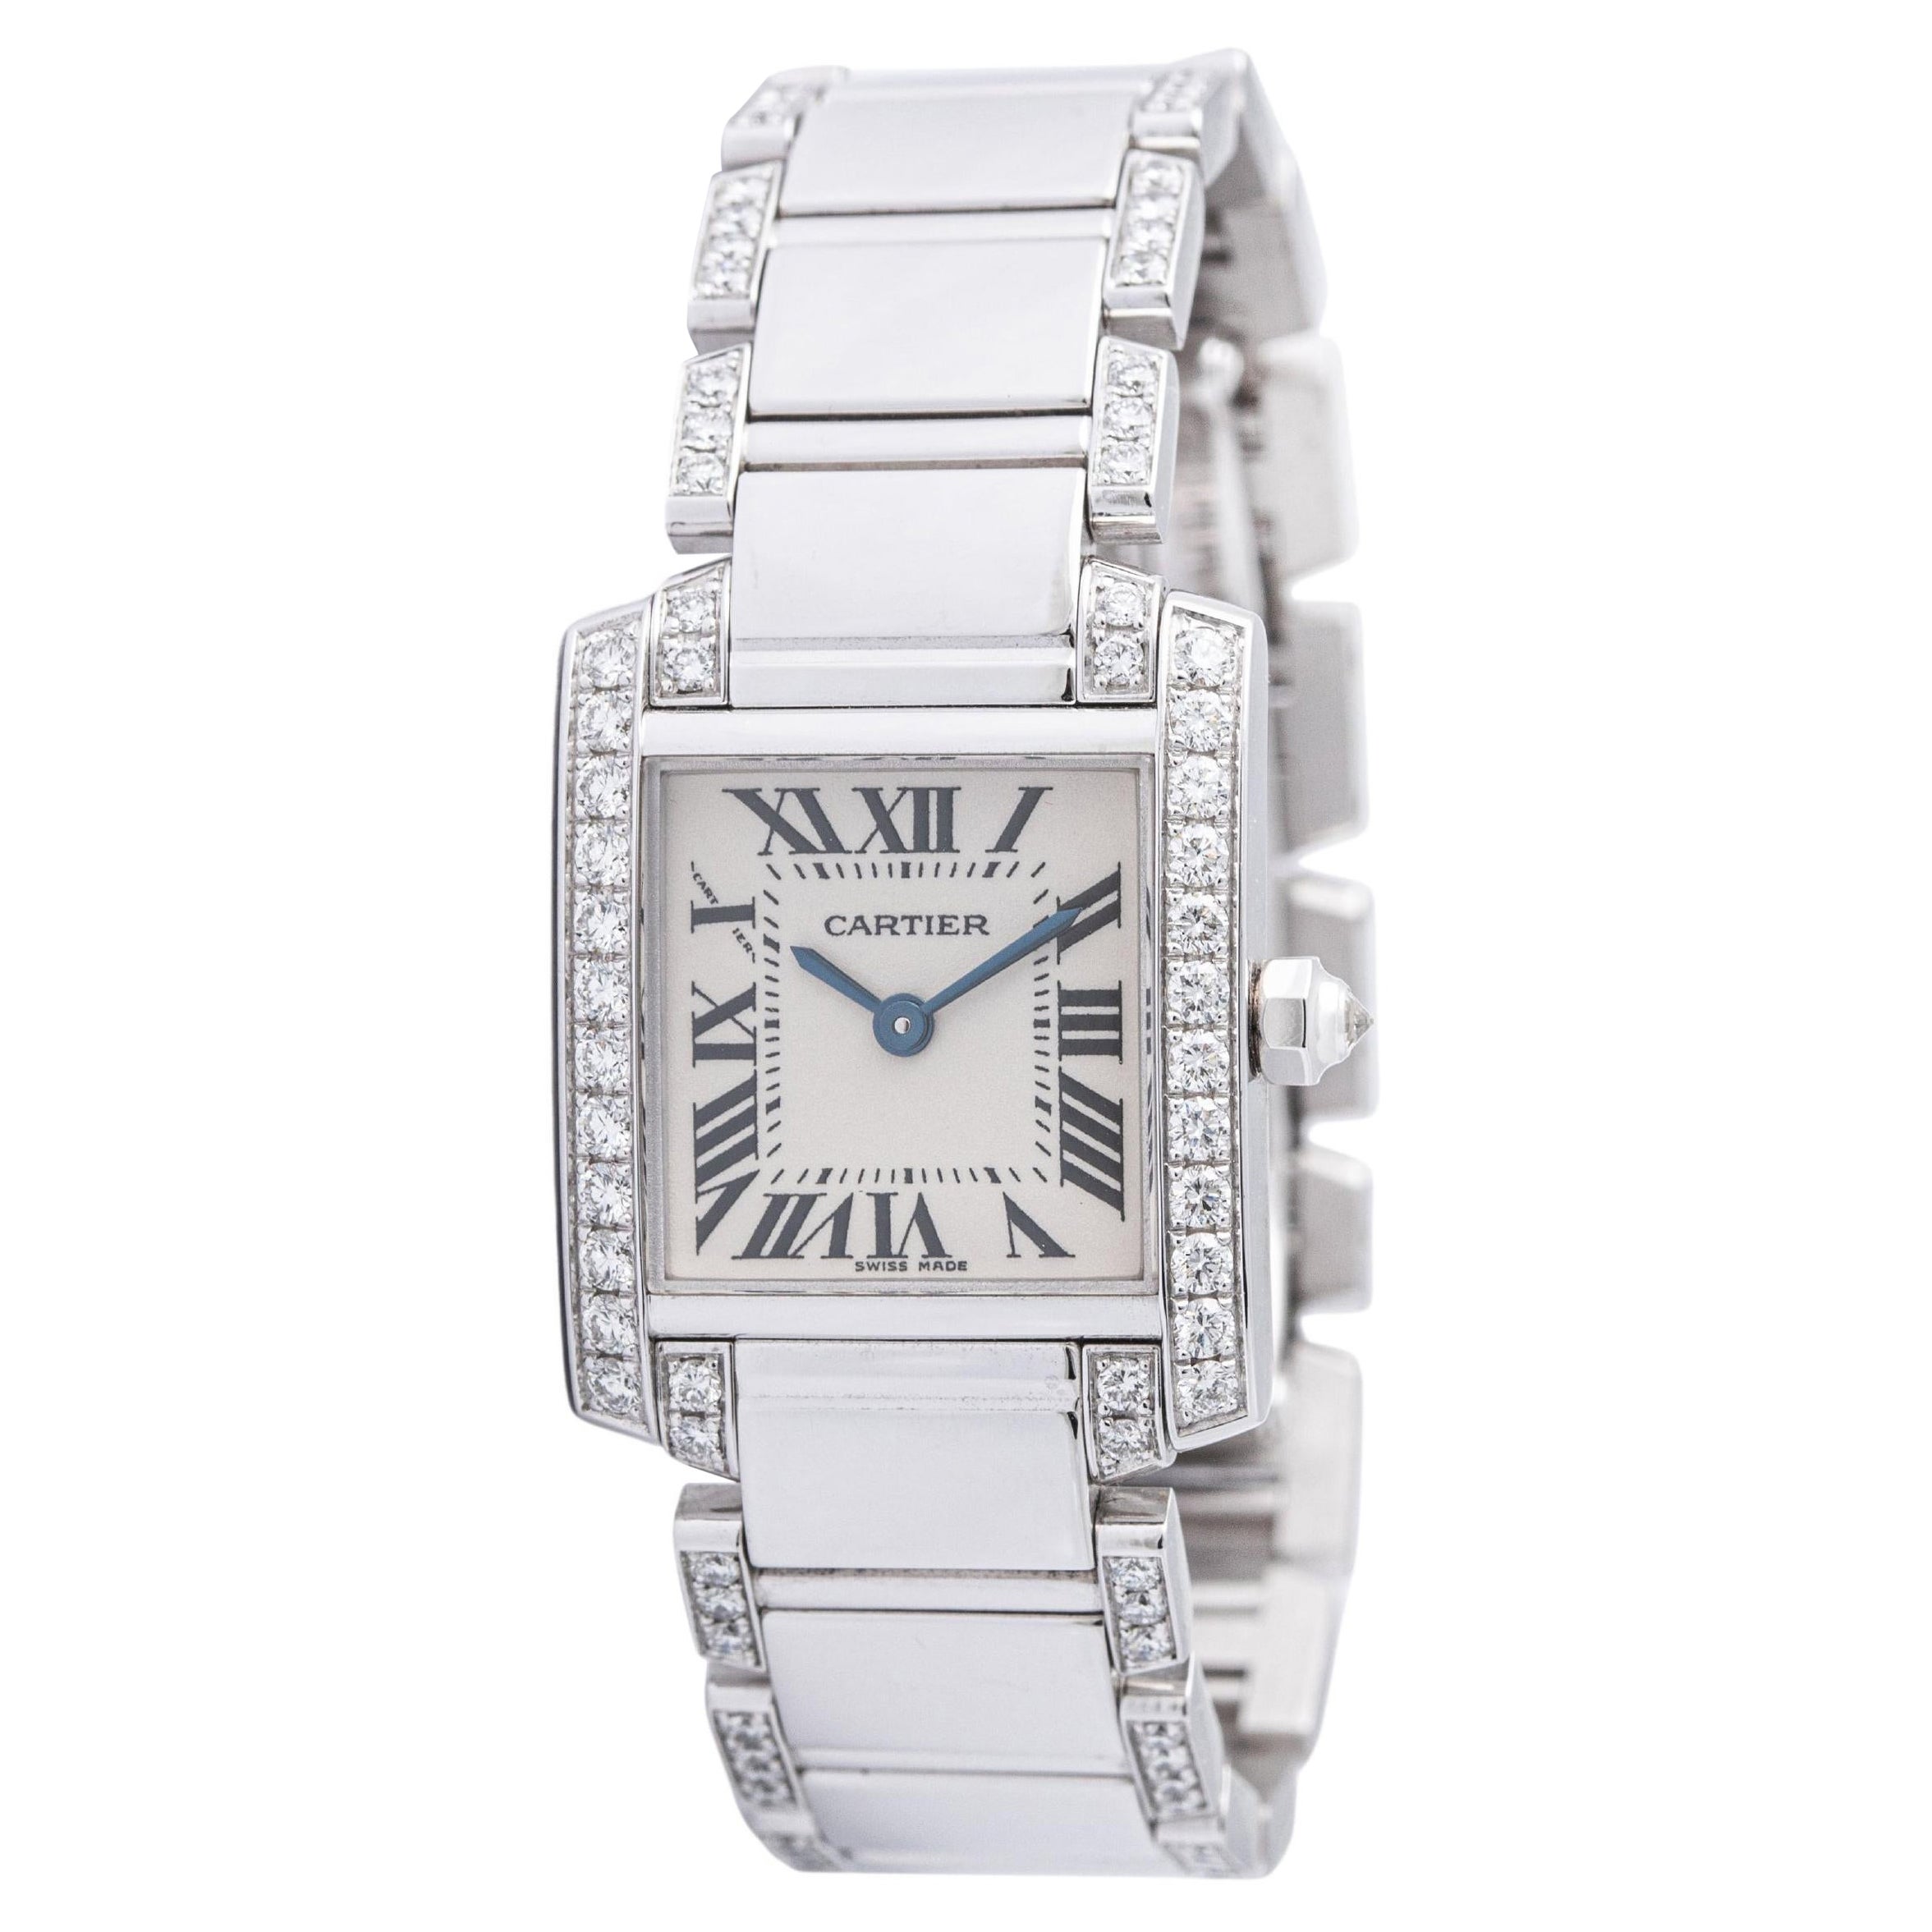 Cartier 'Tank Francaise' White Gold 18K Diamond Ladies Watch